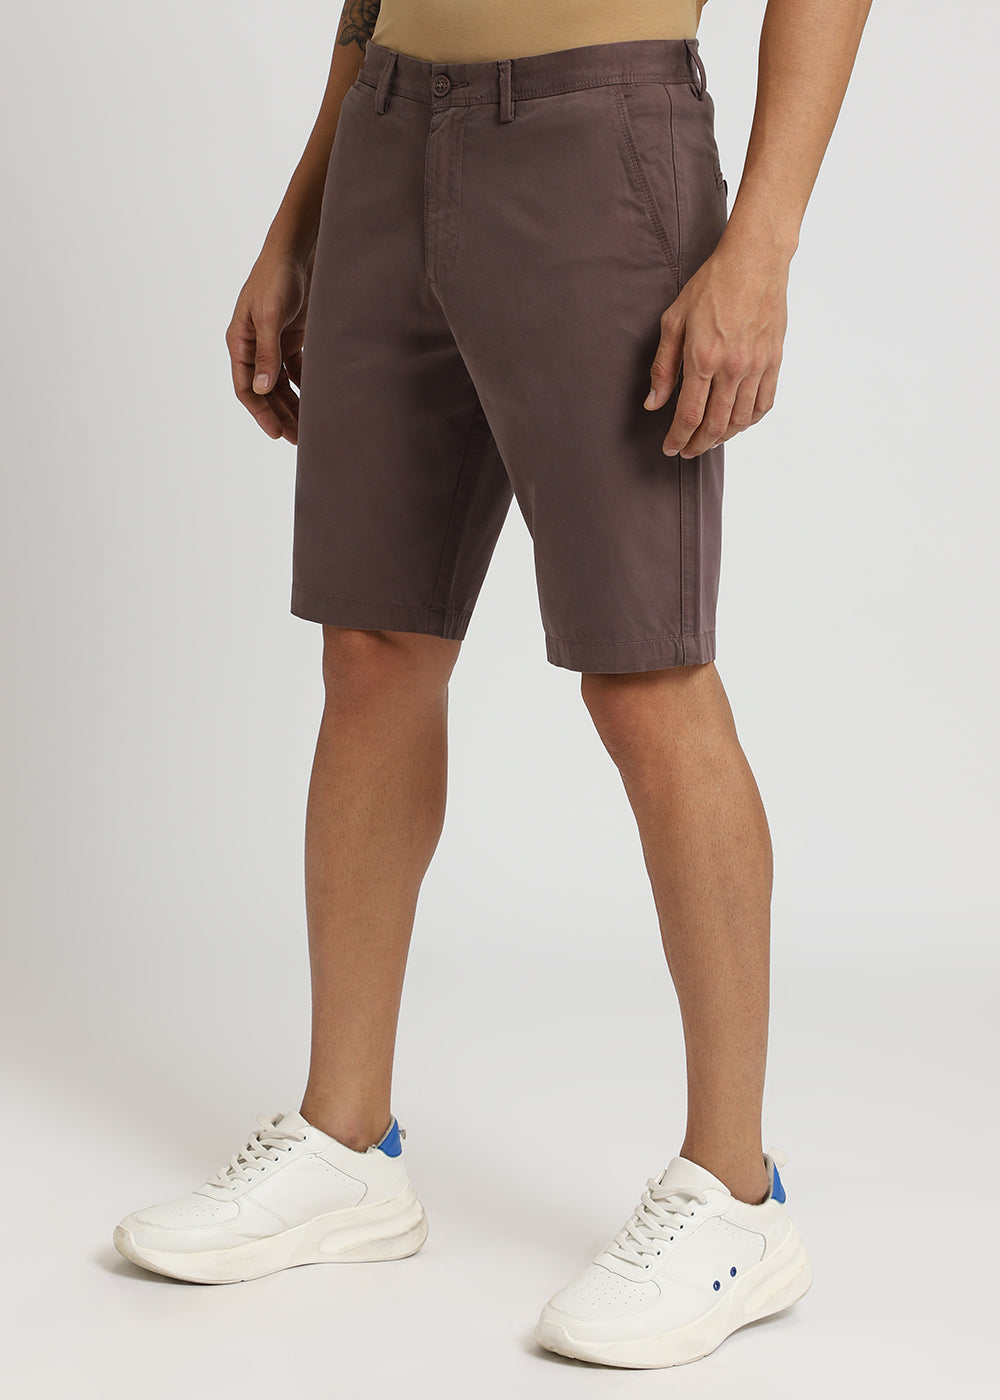 Auburn Brown Shorts